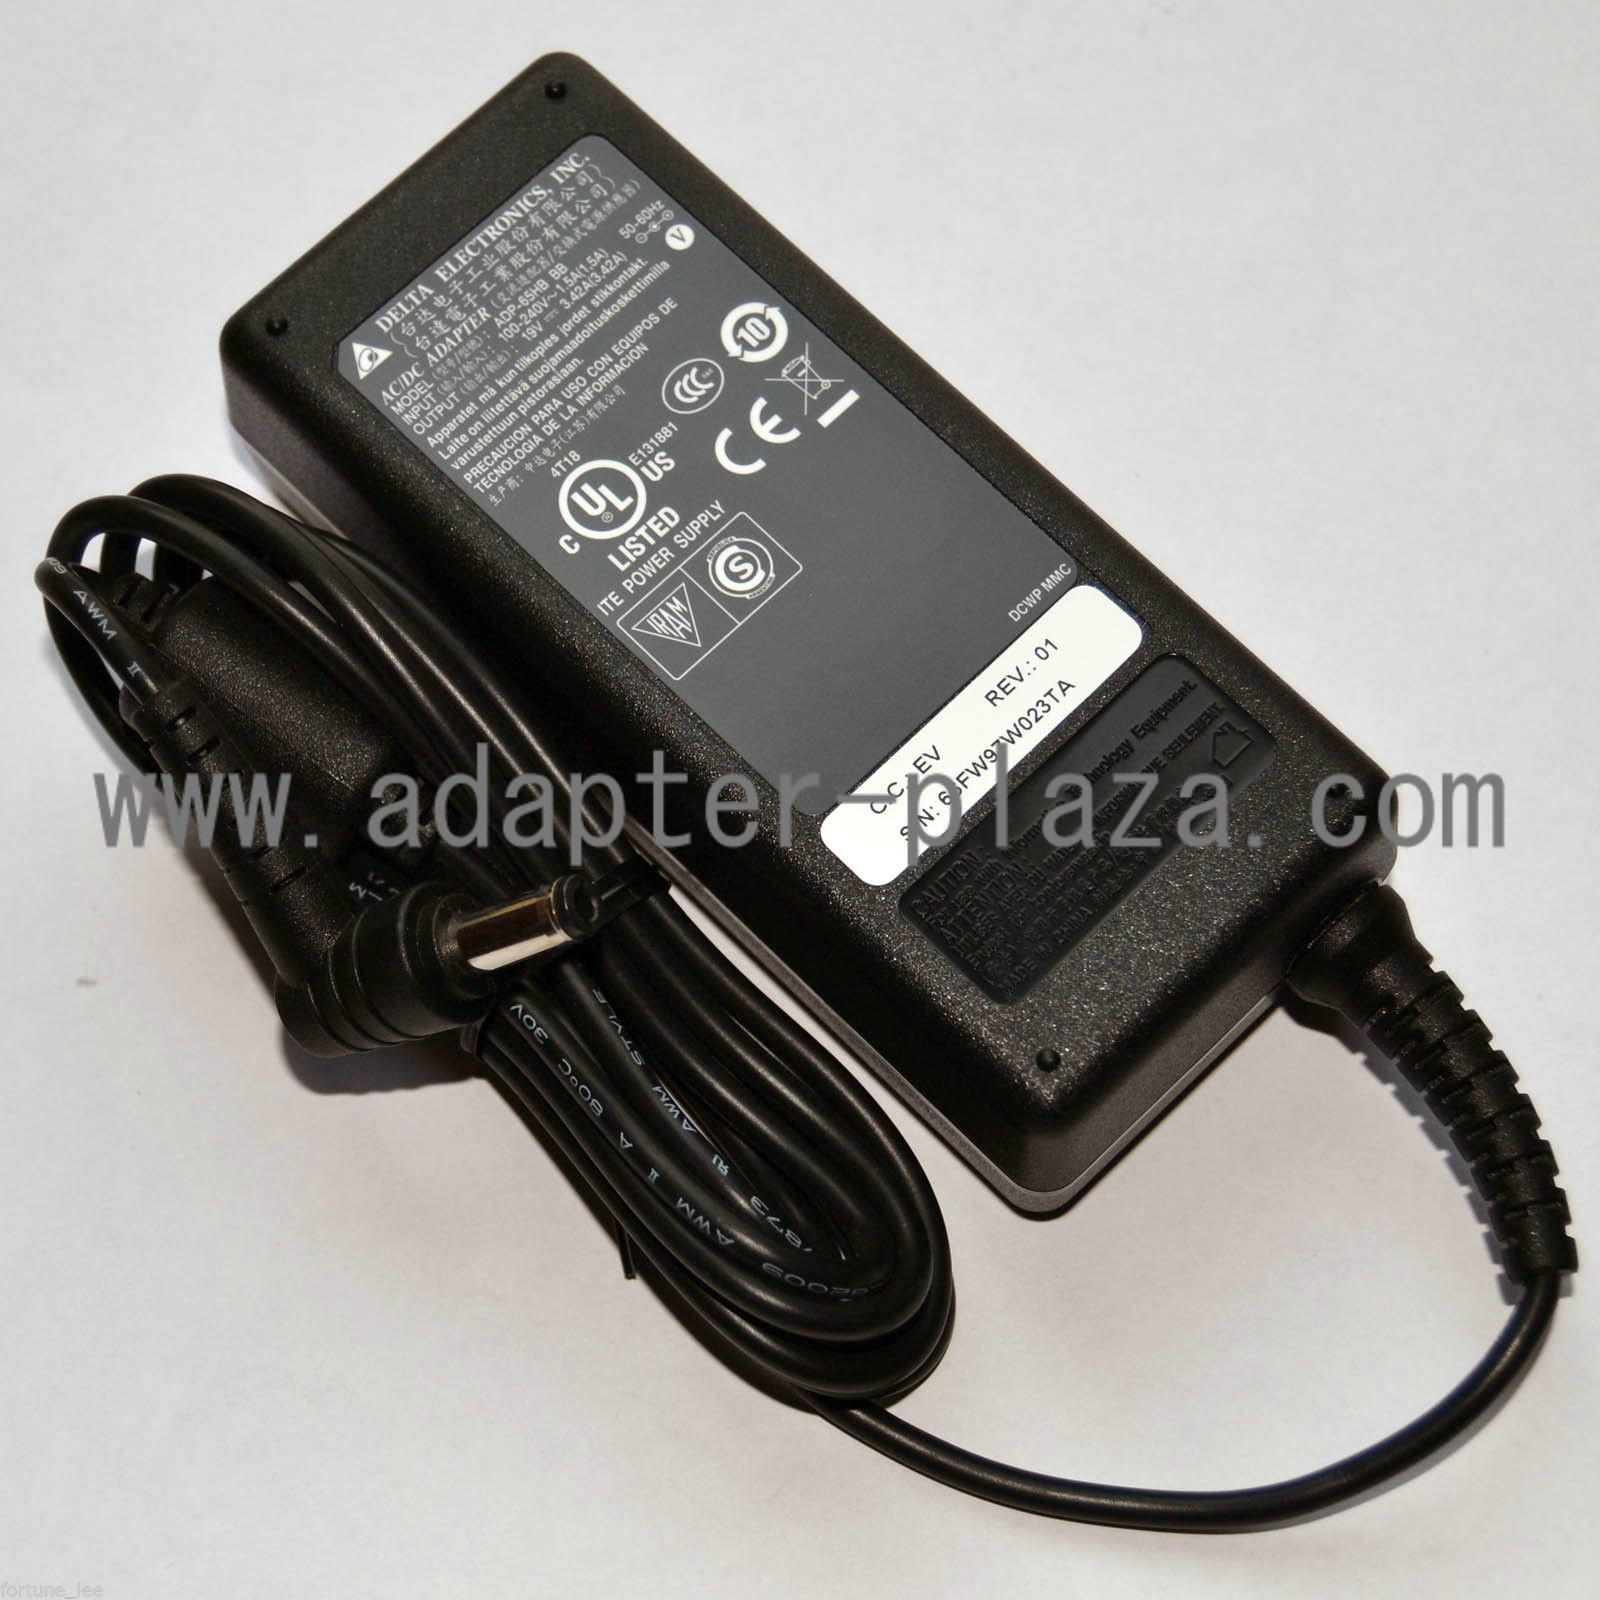 New Original 19V 3.42A DELTA 5.5*2.5mm Power AC Charger Adapter for MSI U135 U210 U230 L1300 Notebook PC - Click Image to Close